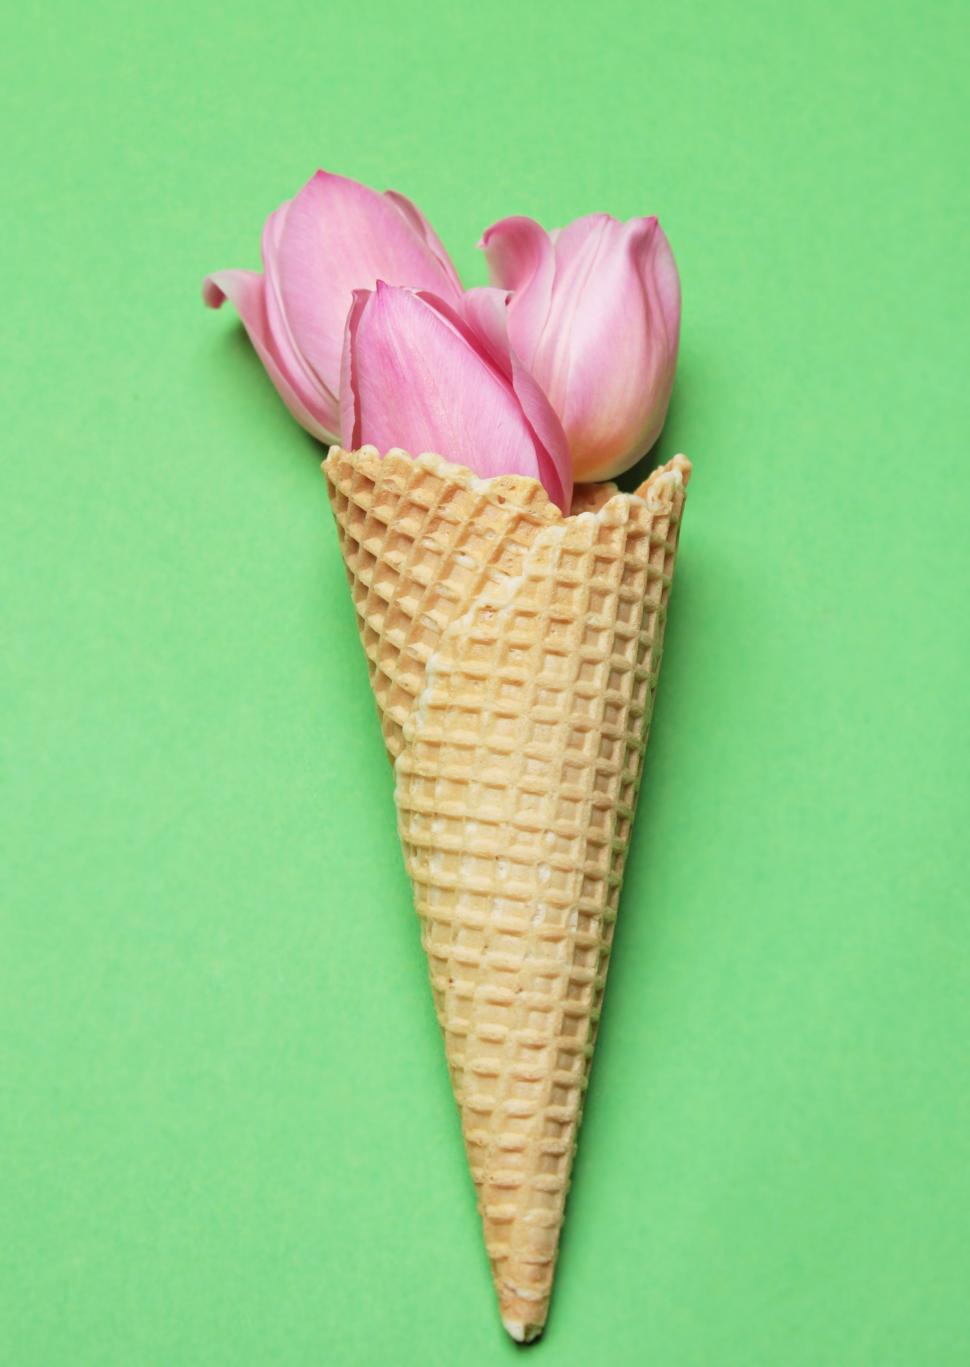 Free Image of Ice cream cone and Tulip Flowers 